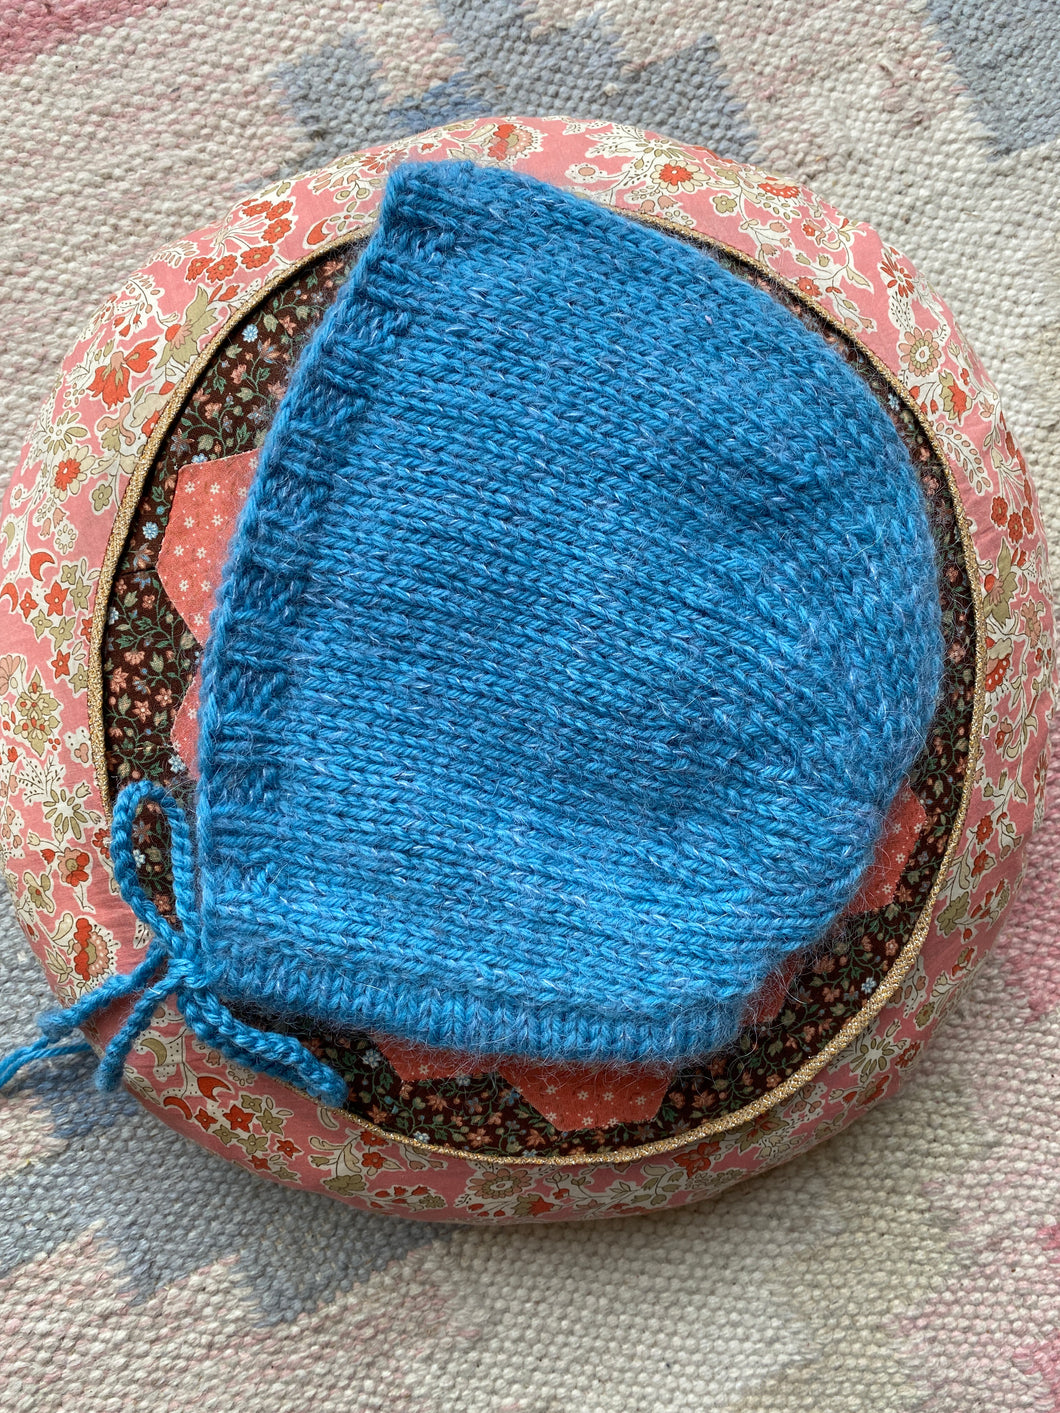 Deima’s bonnet - knitting pattern (dansk)